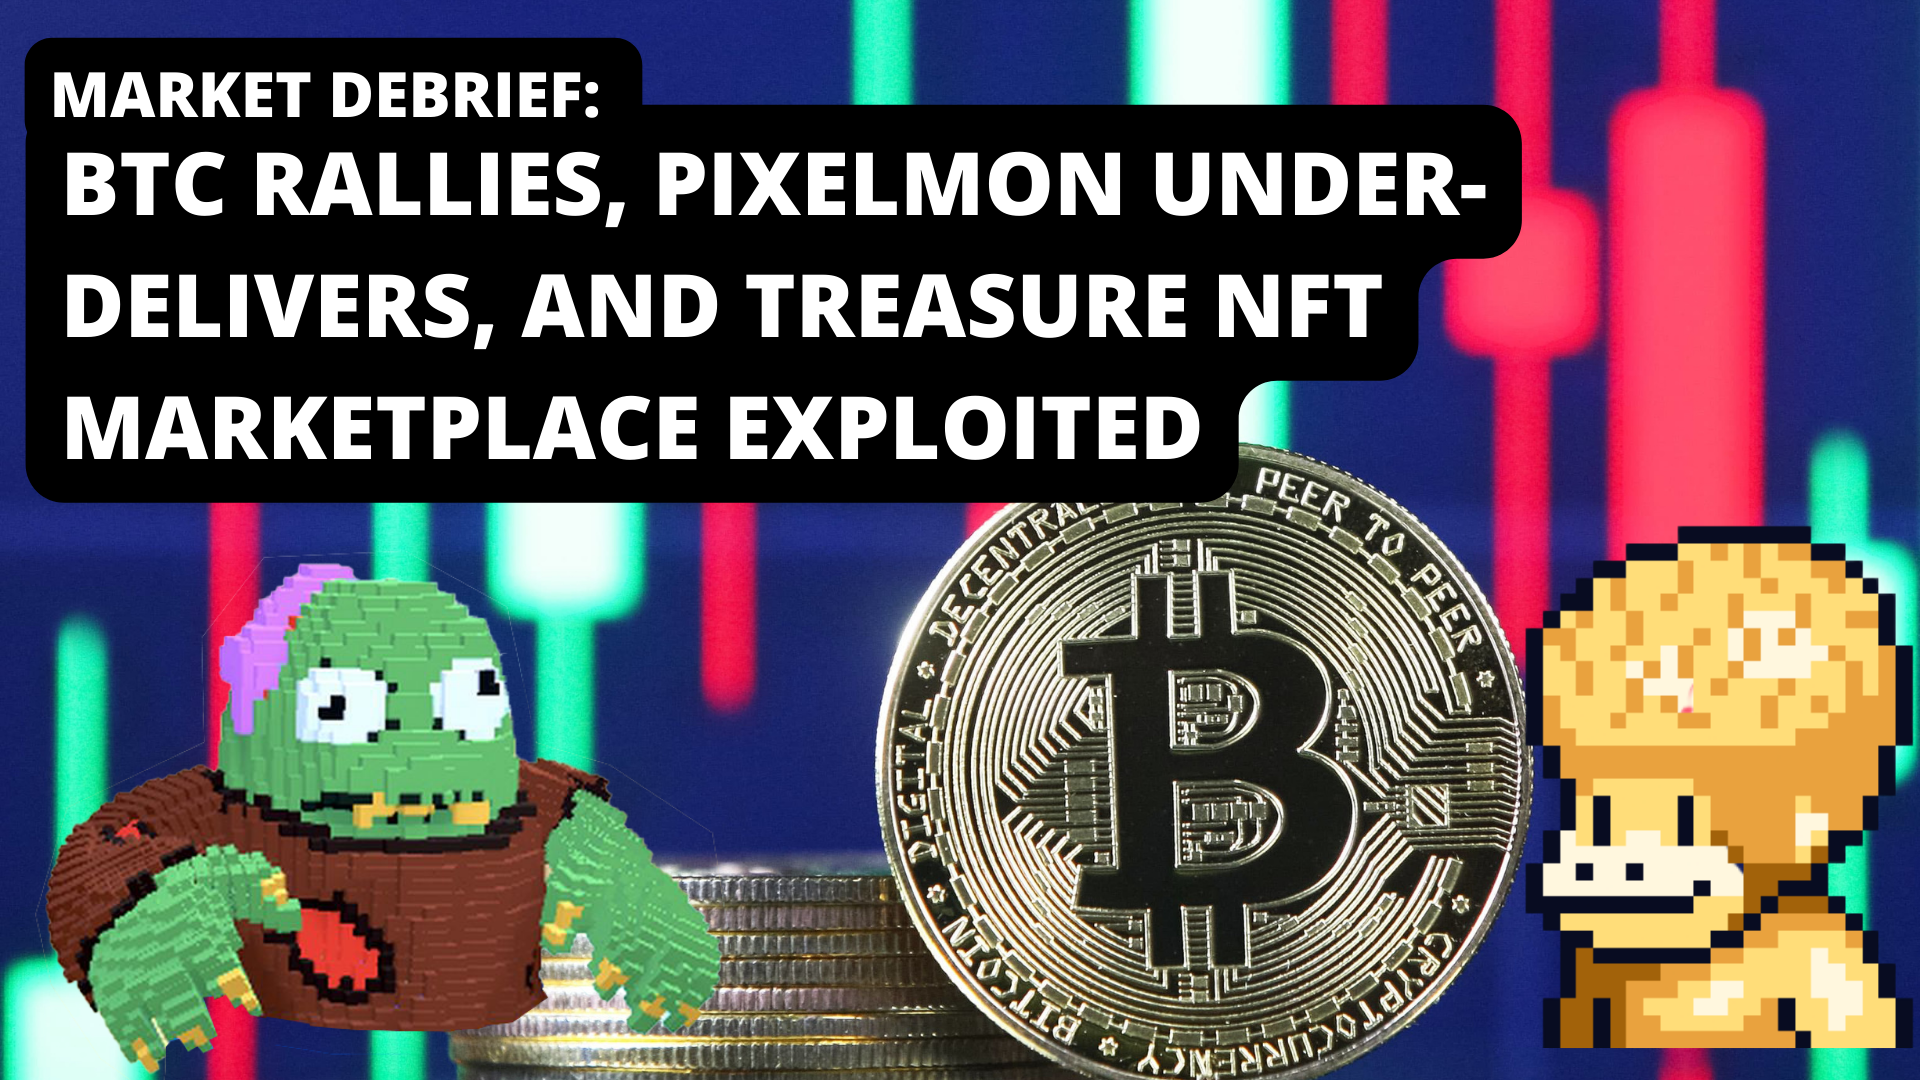 Market Debrief: BTC Rallies, Pixelmon Under-Delivers, And Treasure NFT Marketplace Exploited